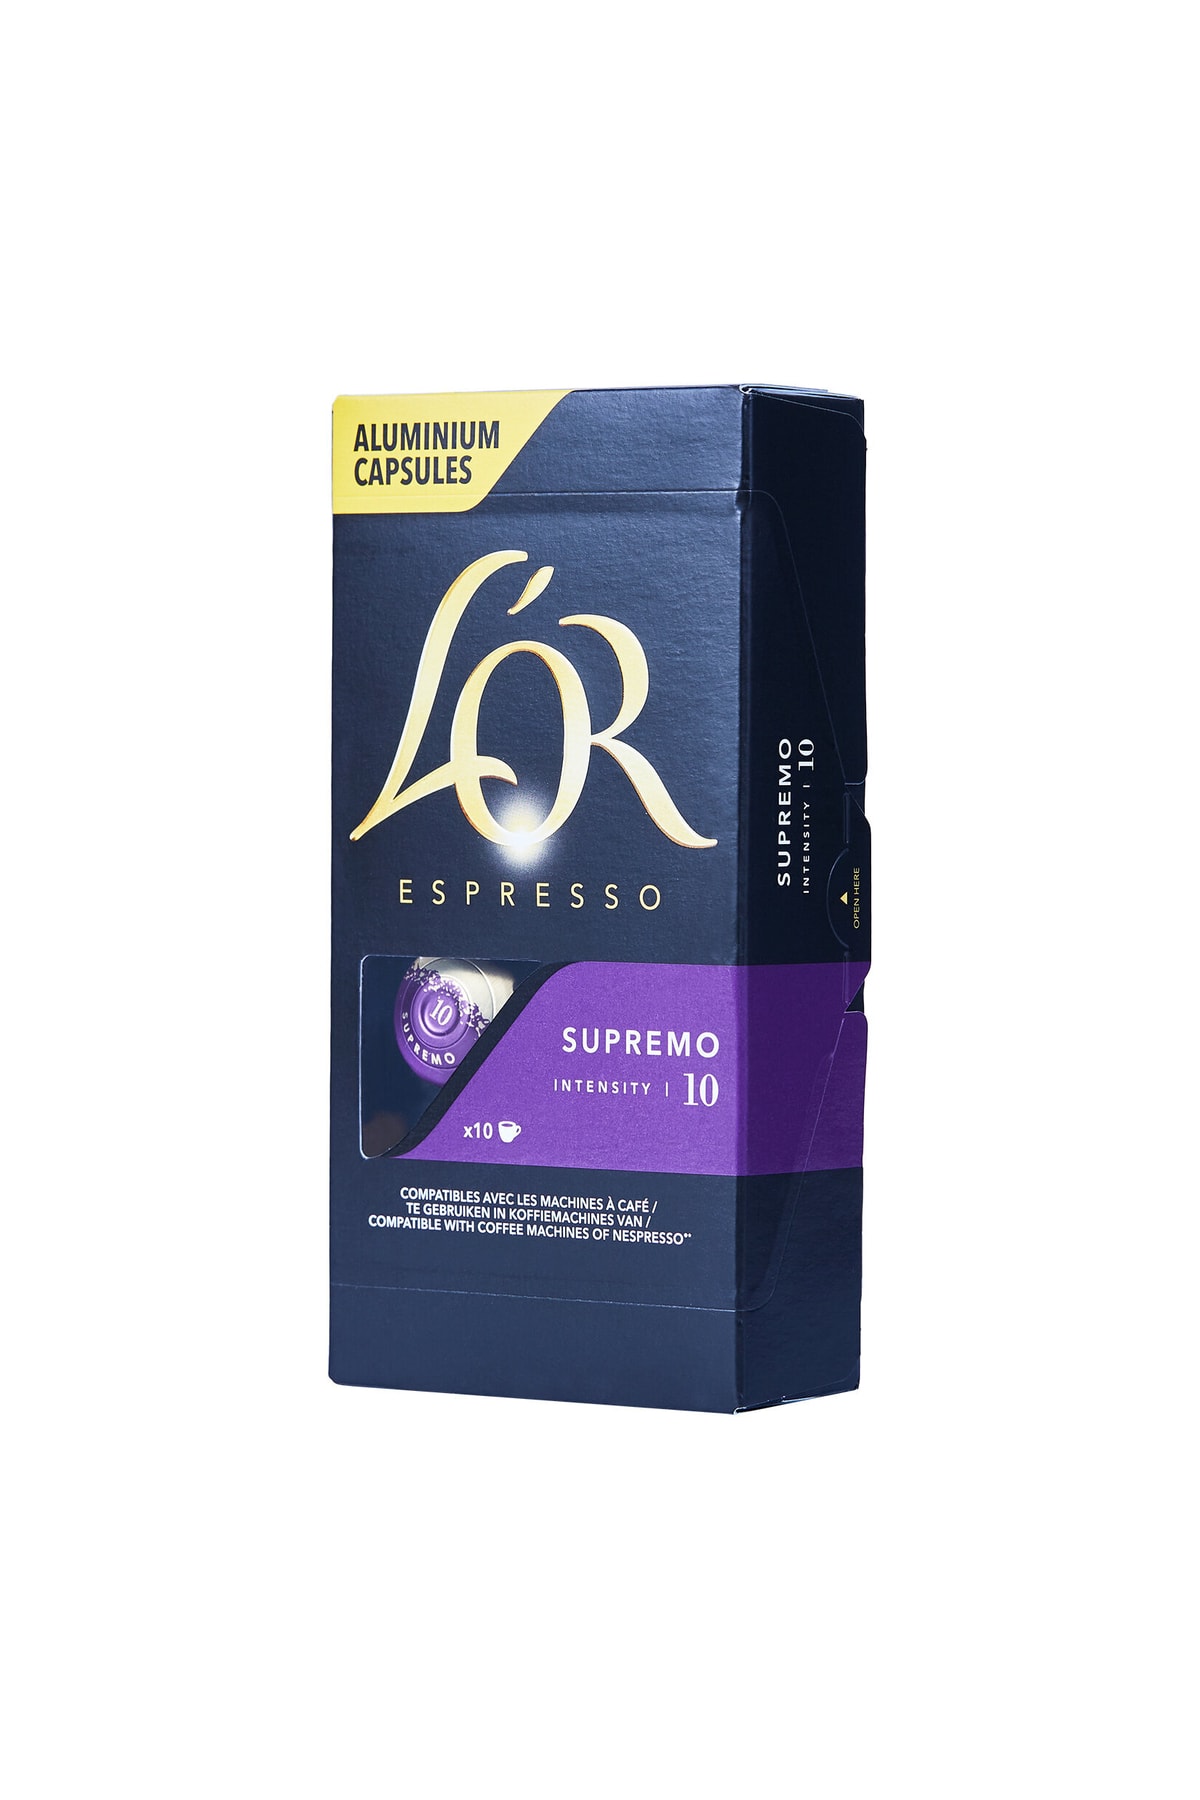 L'OR Espresso 10 Supremo 10lu Kapsül Kahve